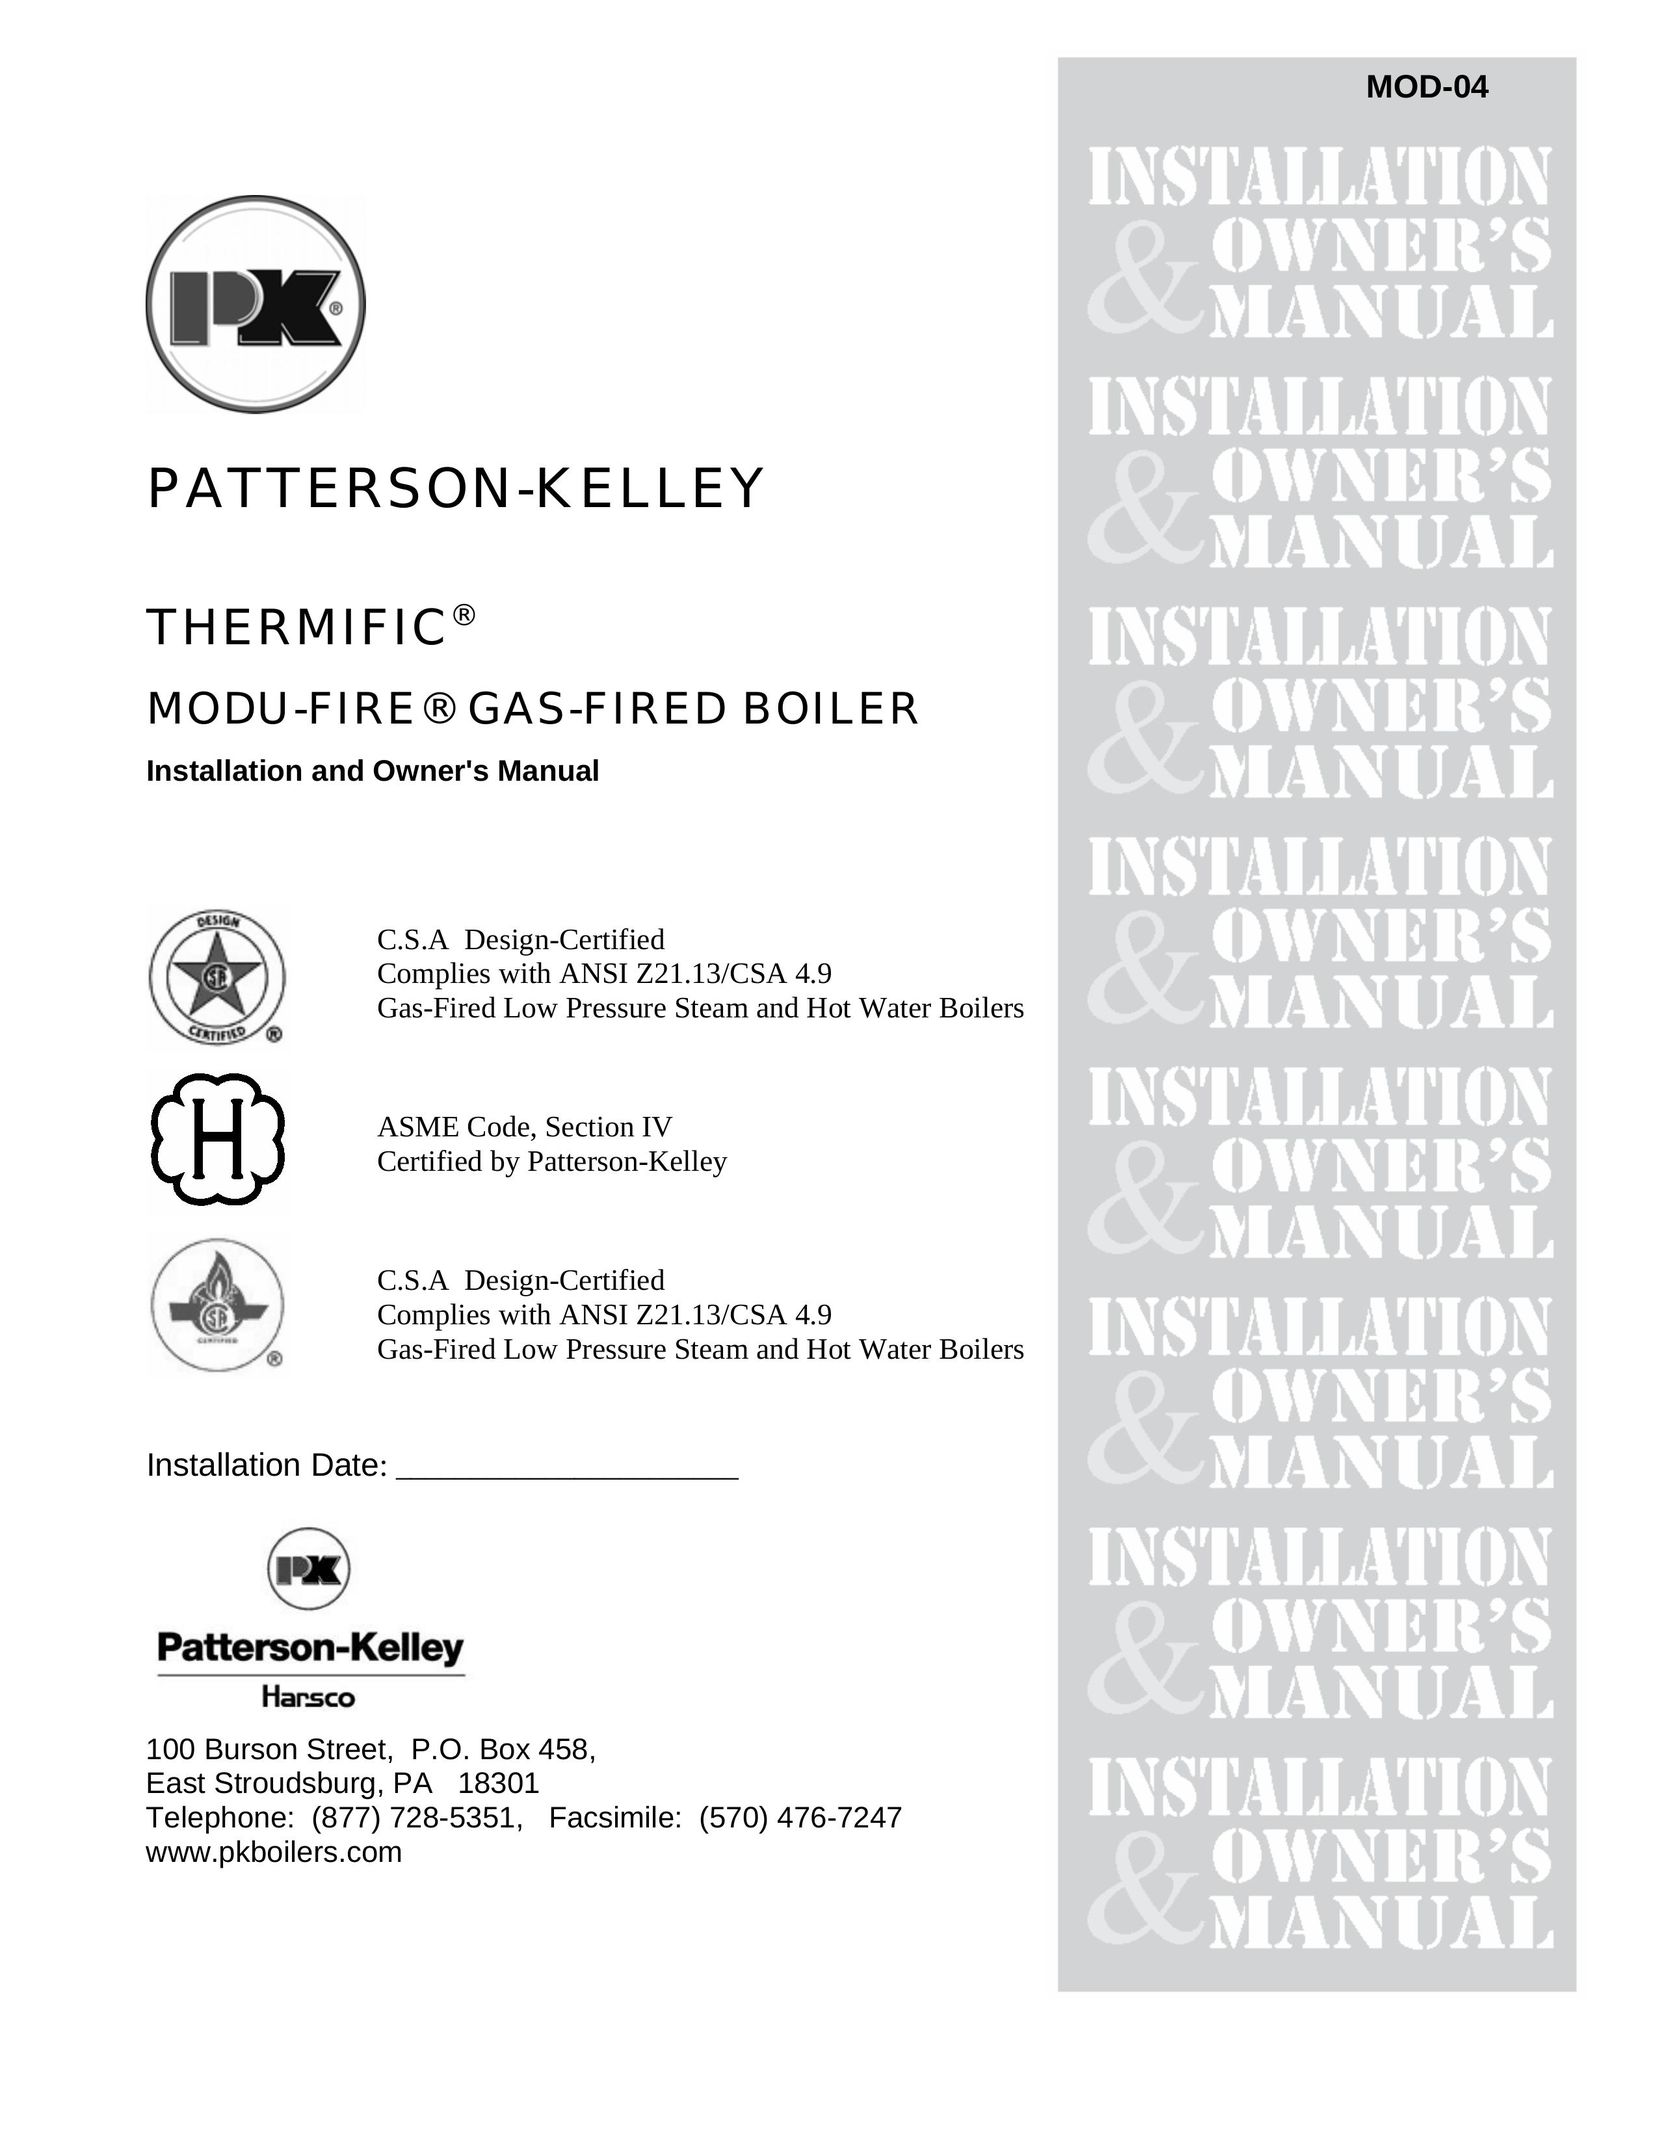 Patterson-Kelley MOD-04 Boiler User Manual